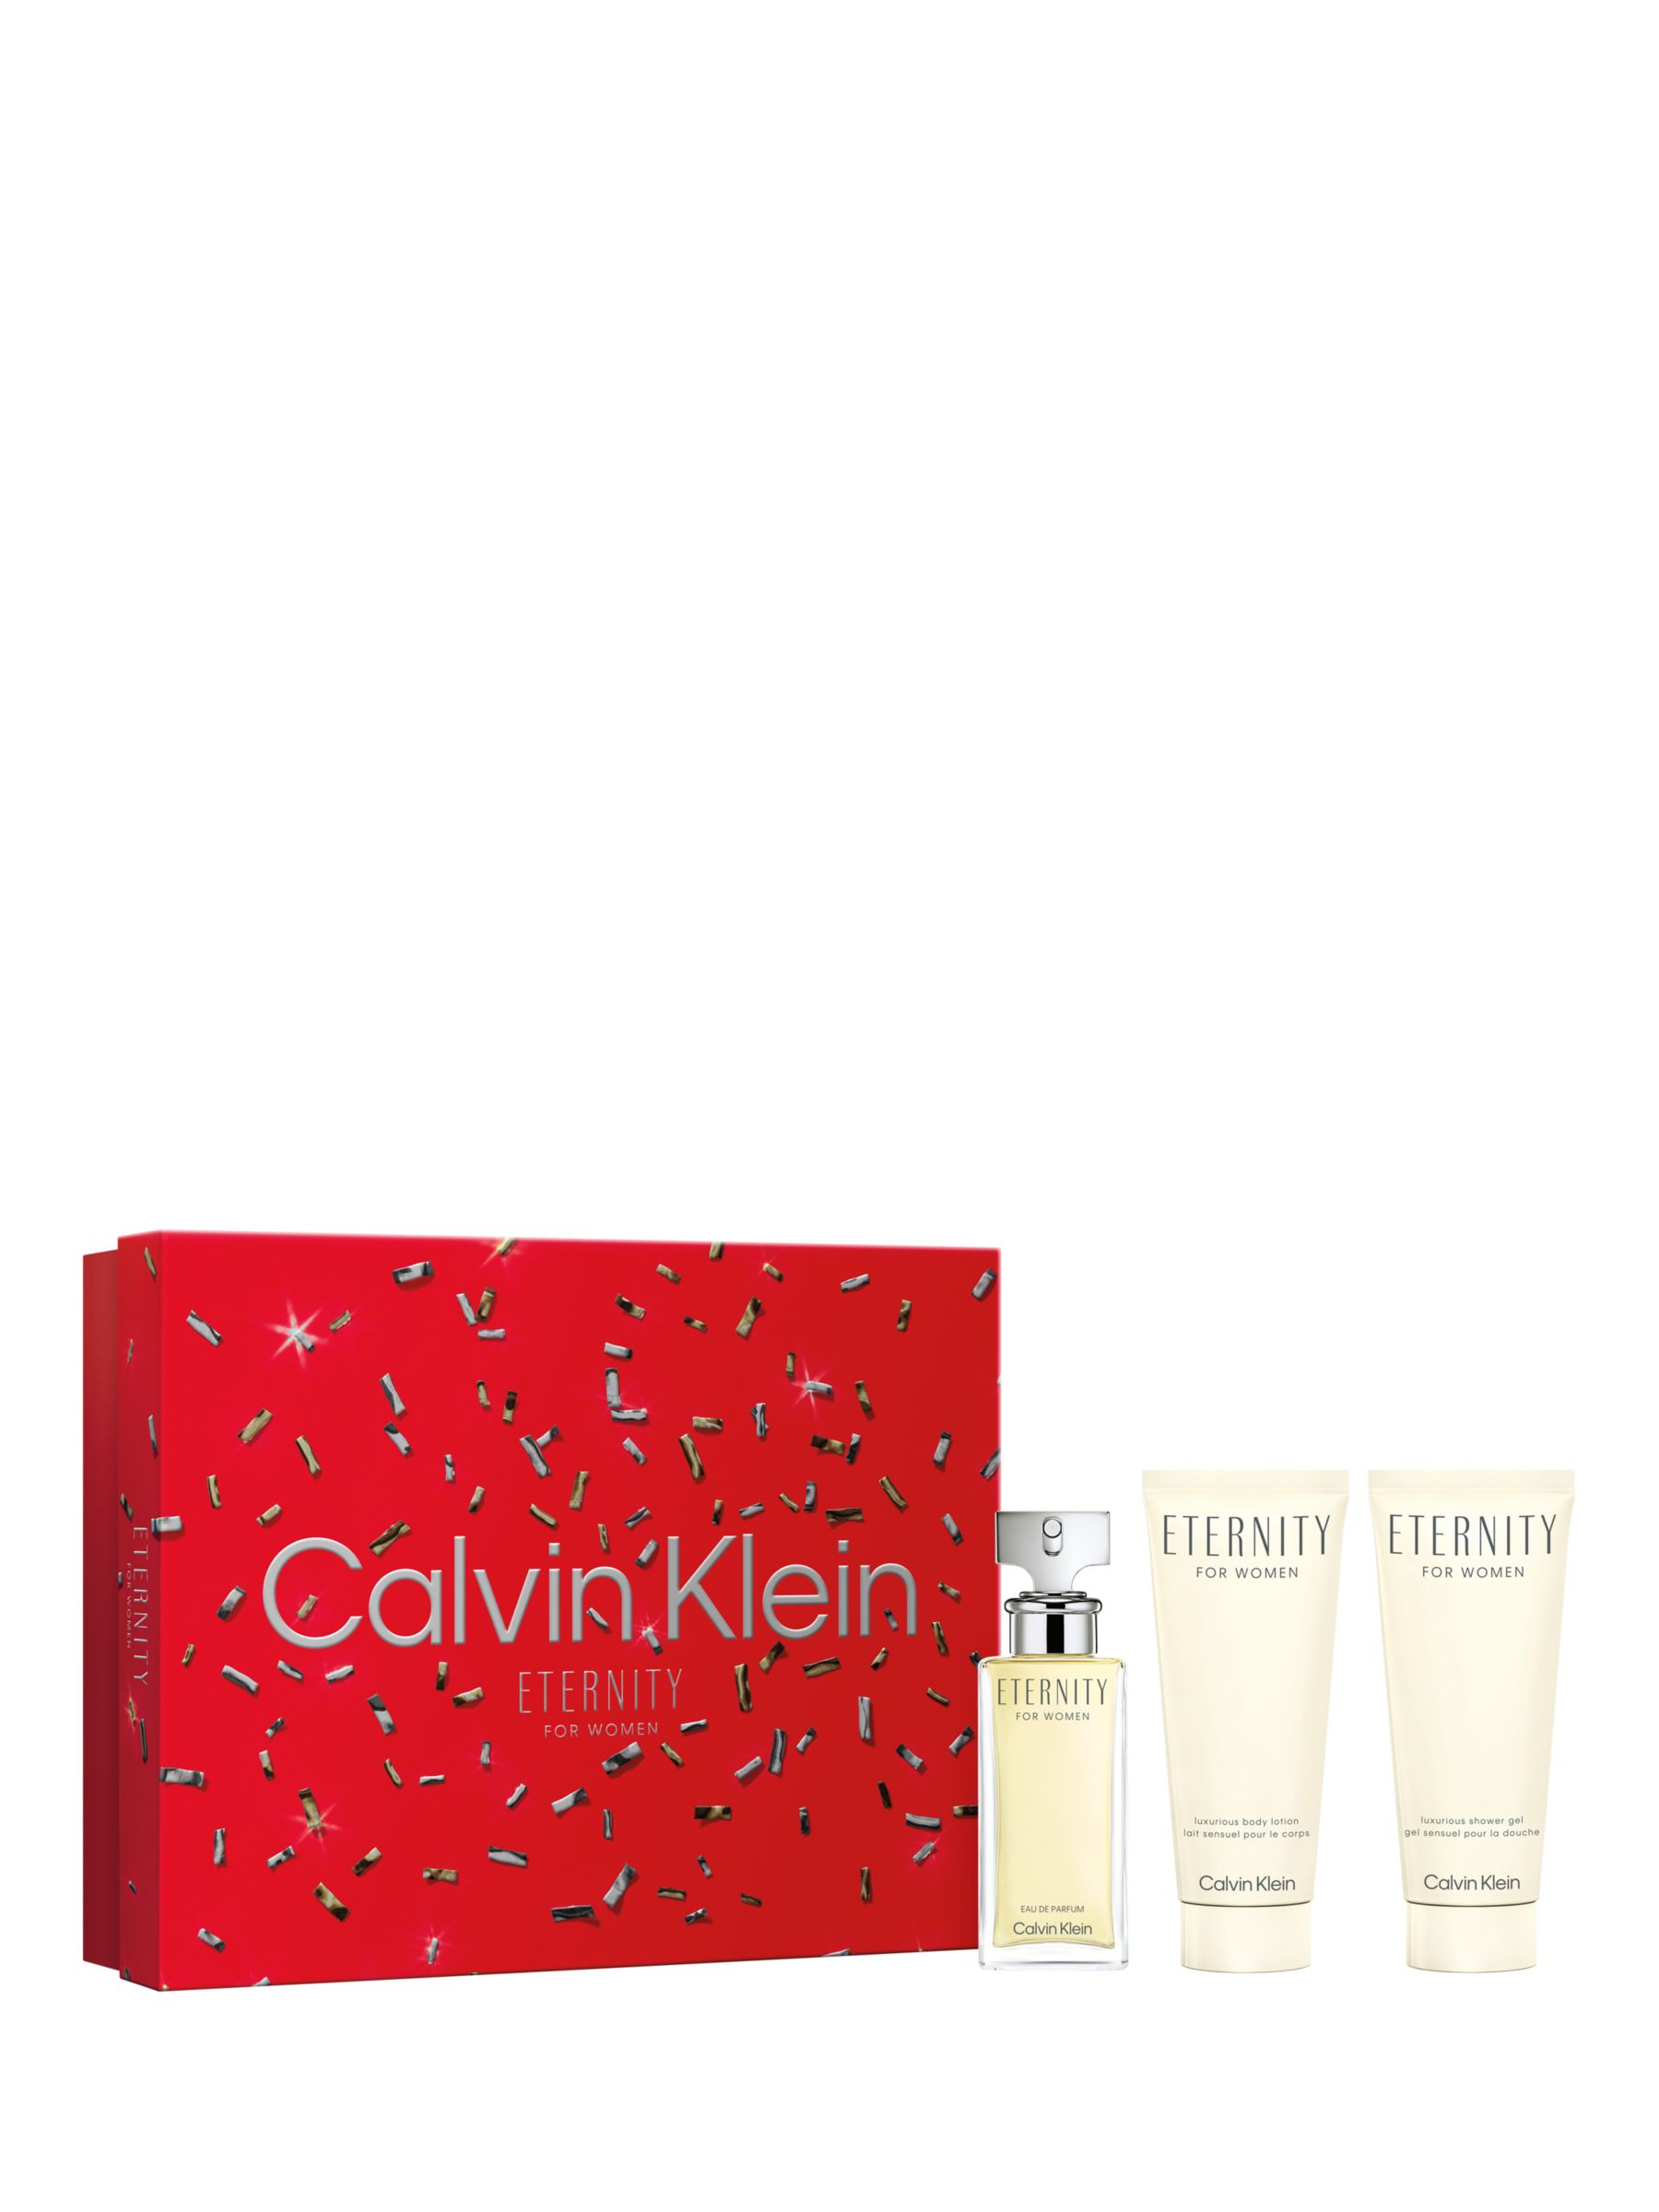 Calvin Klein Eternity For Women Eau de Parfum Gift Set